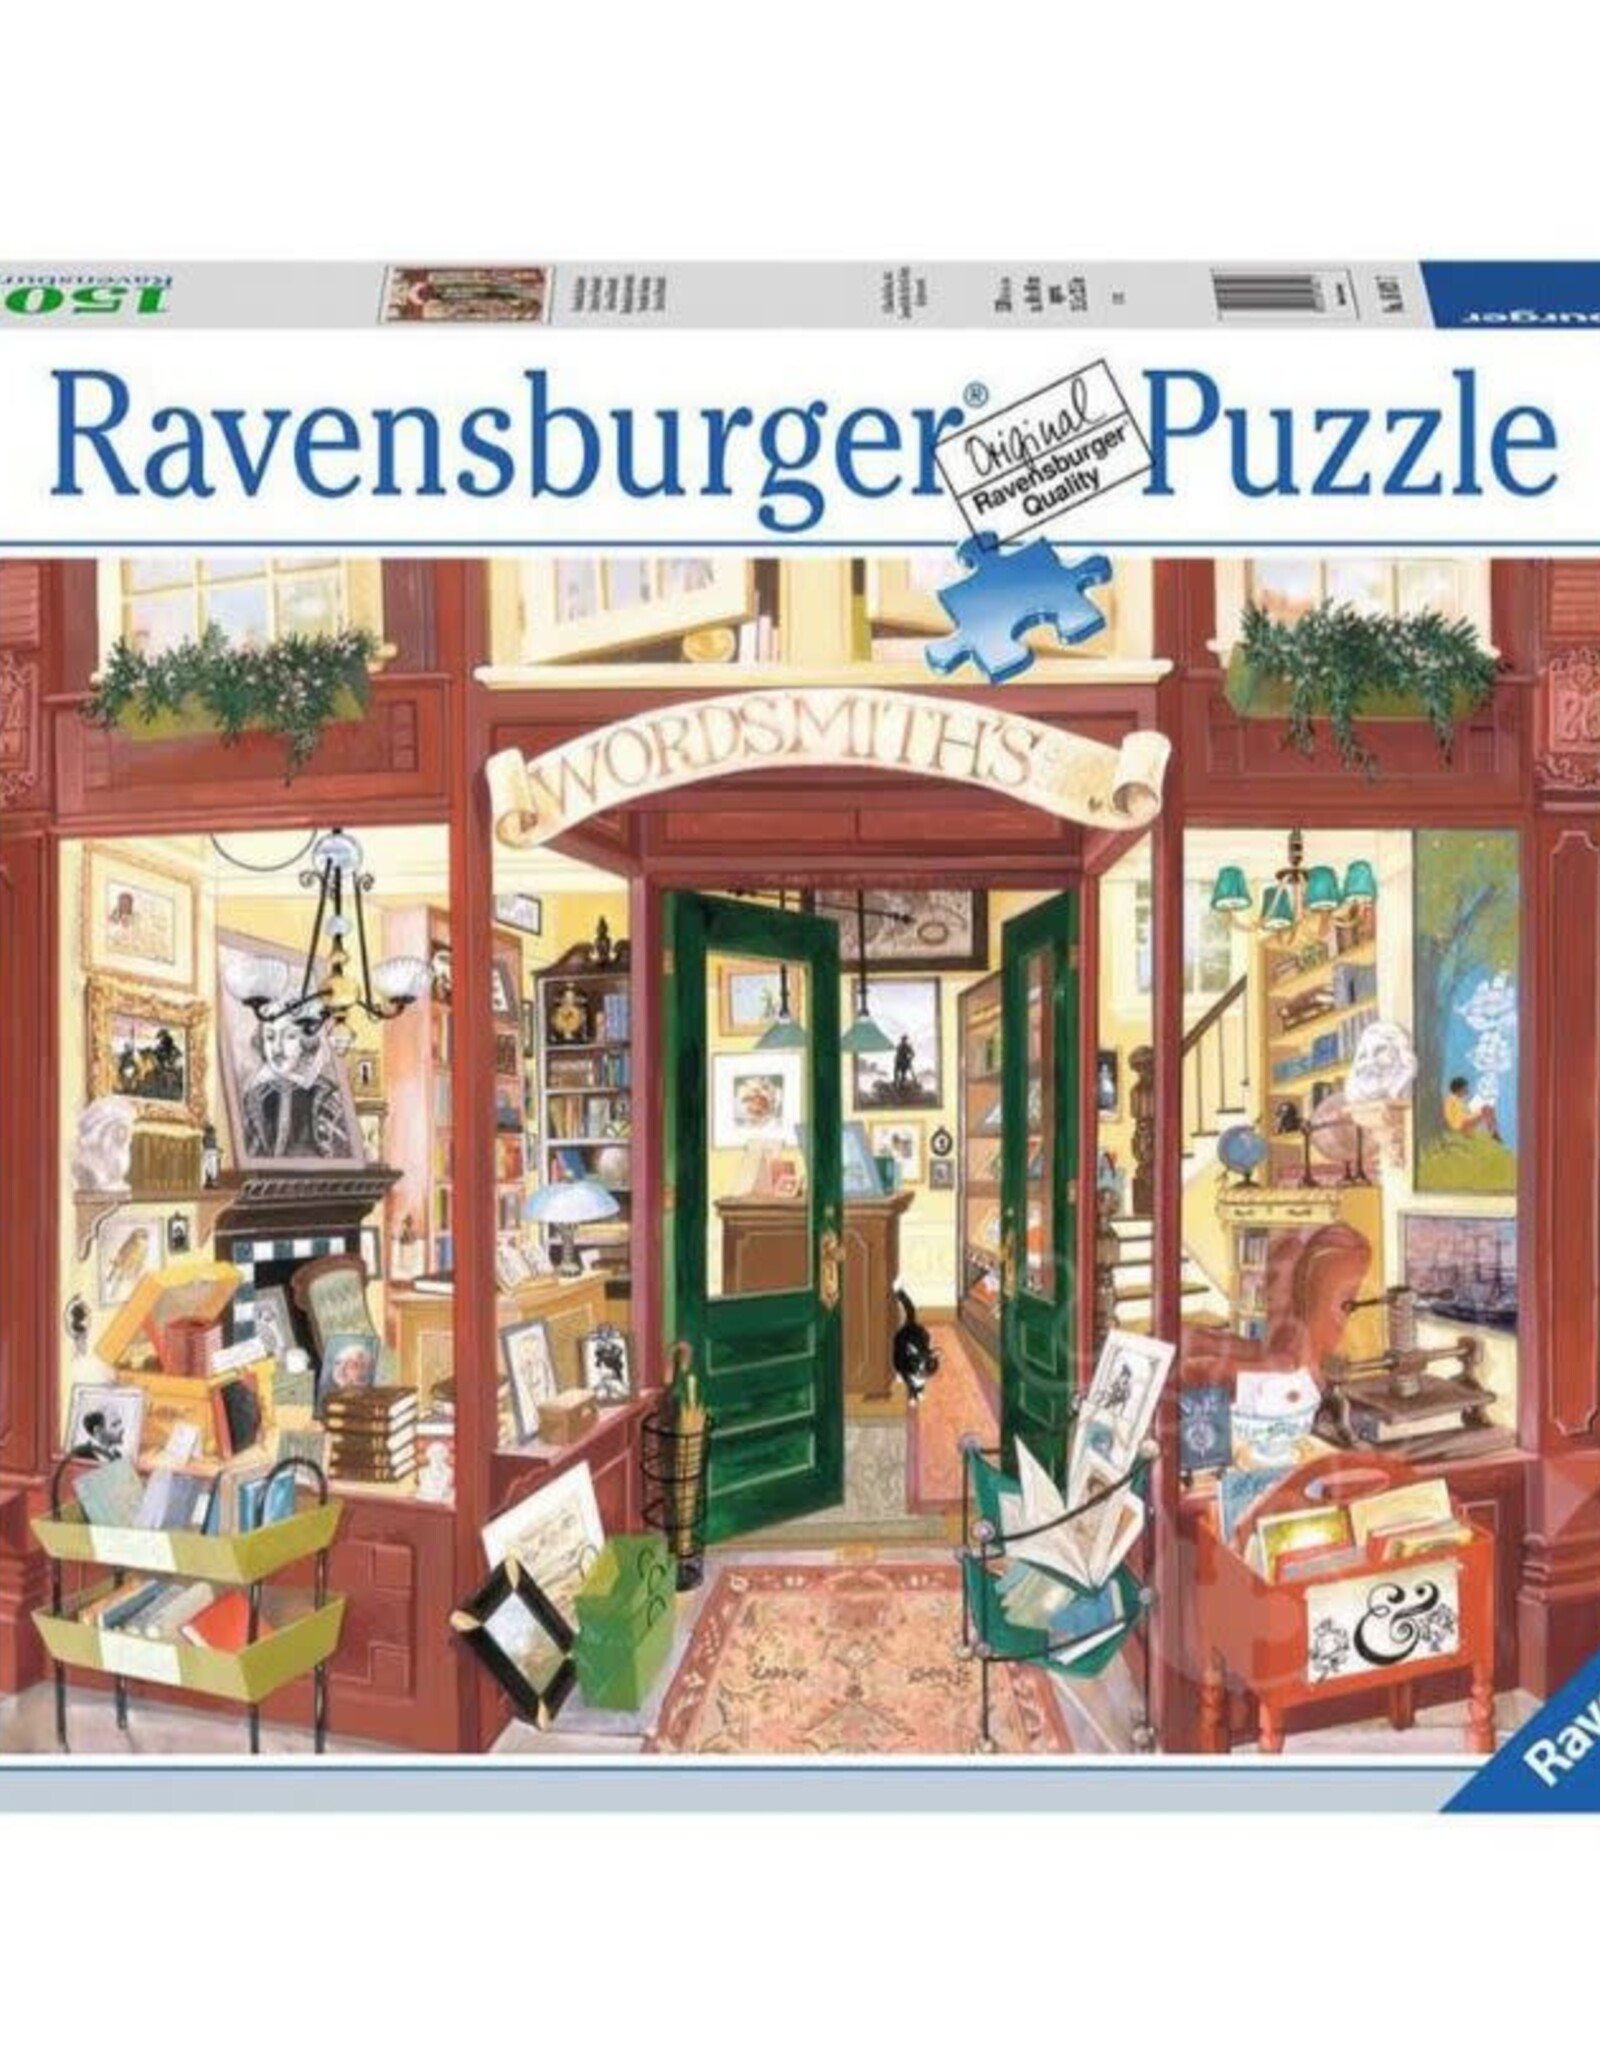 Ravensburger Wordsmith's Bookshop 1500pc RAV16821